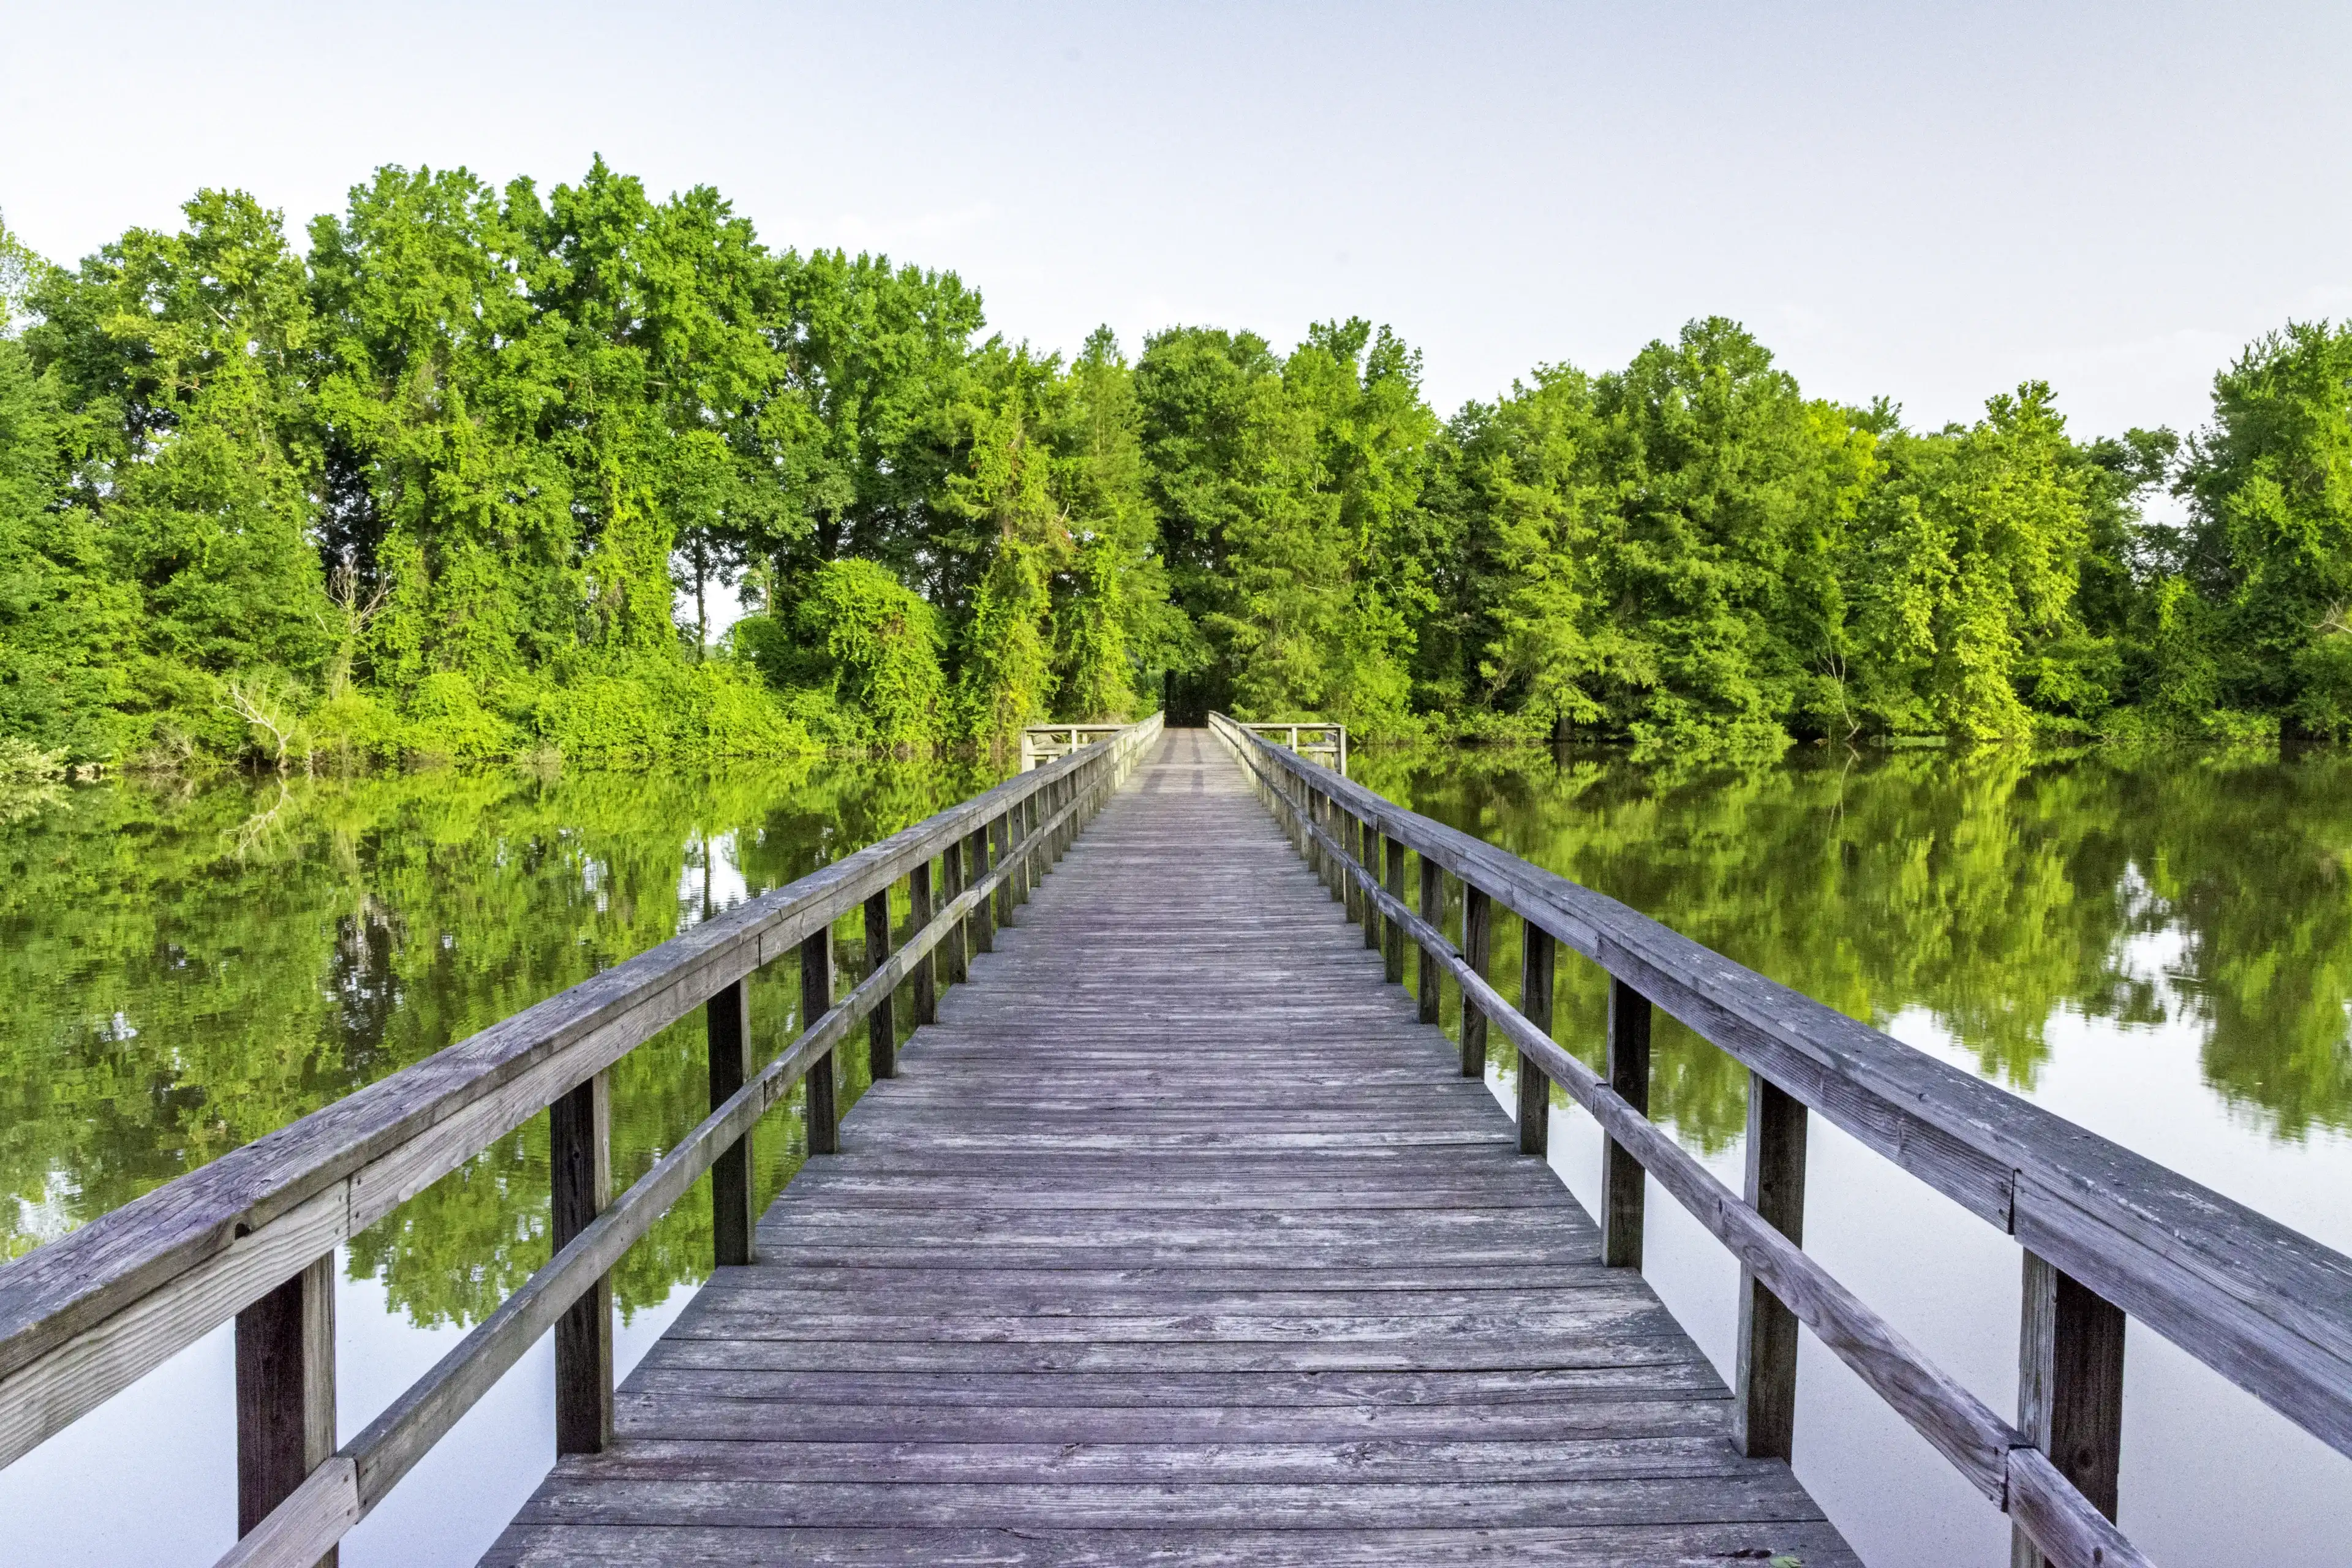 Foot bridge leading across an Alabama swamp